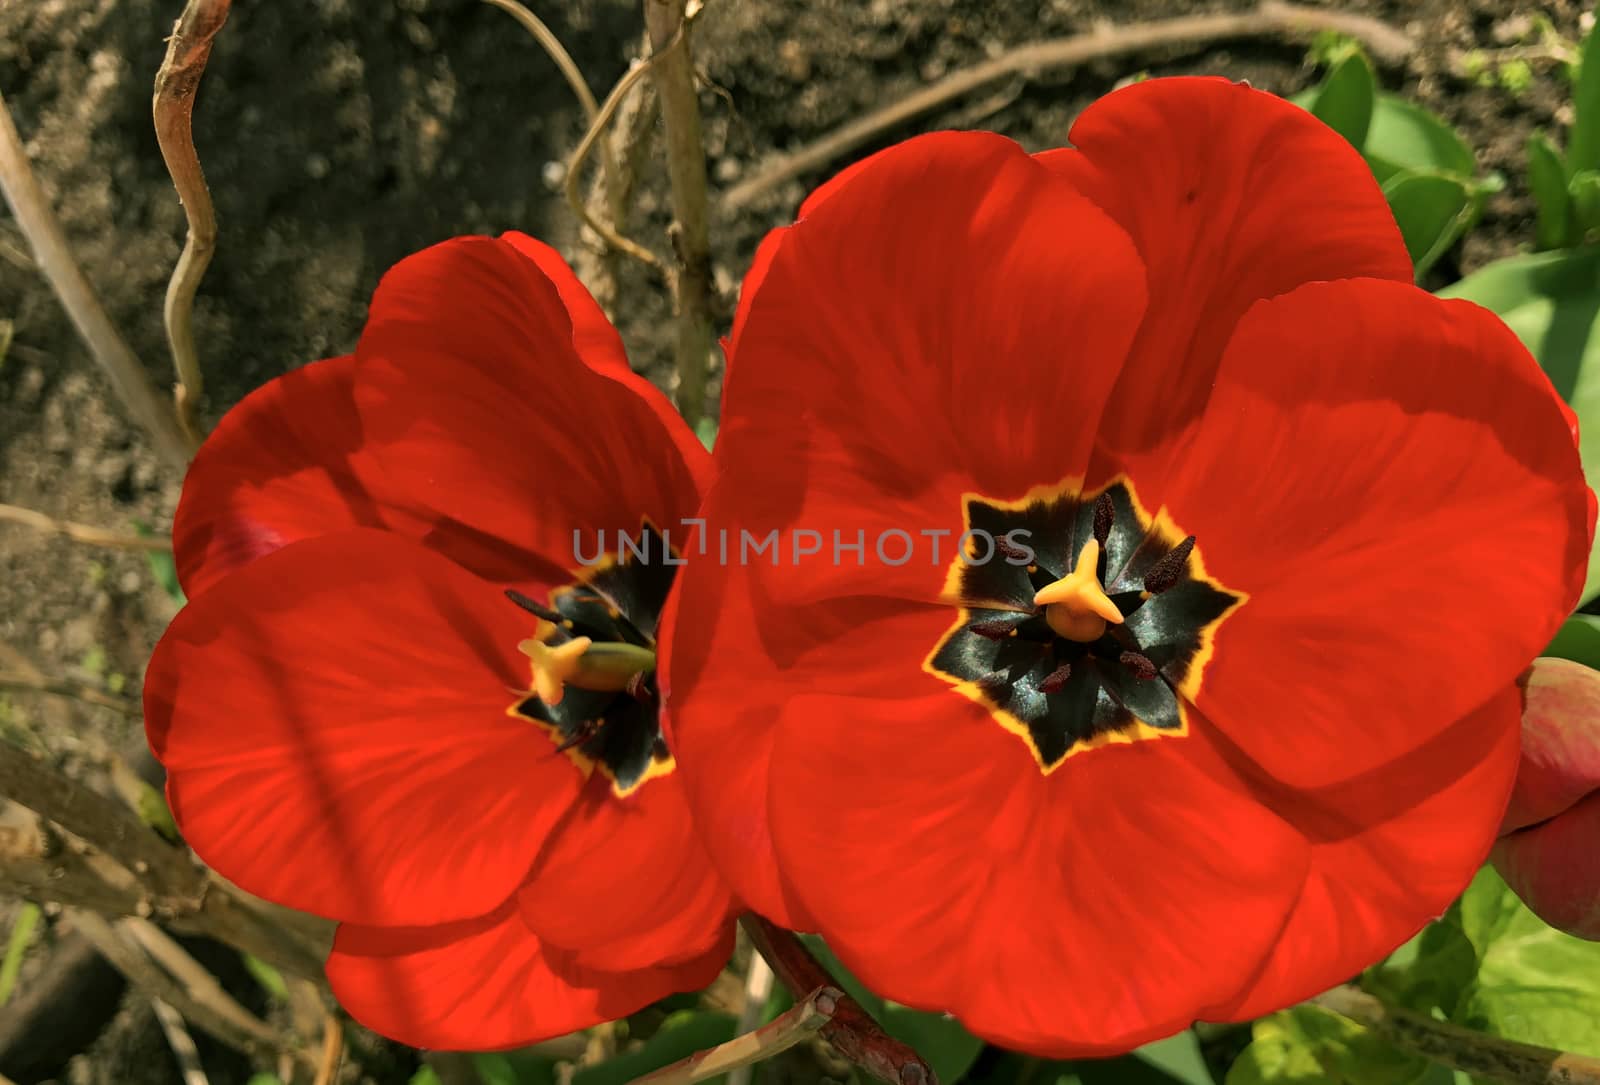 red tulip in full bloom by F1b0nacci